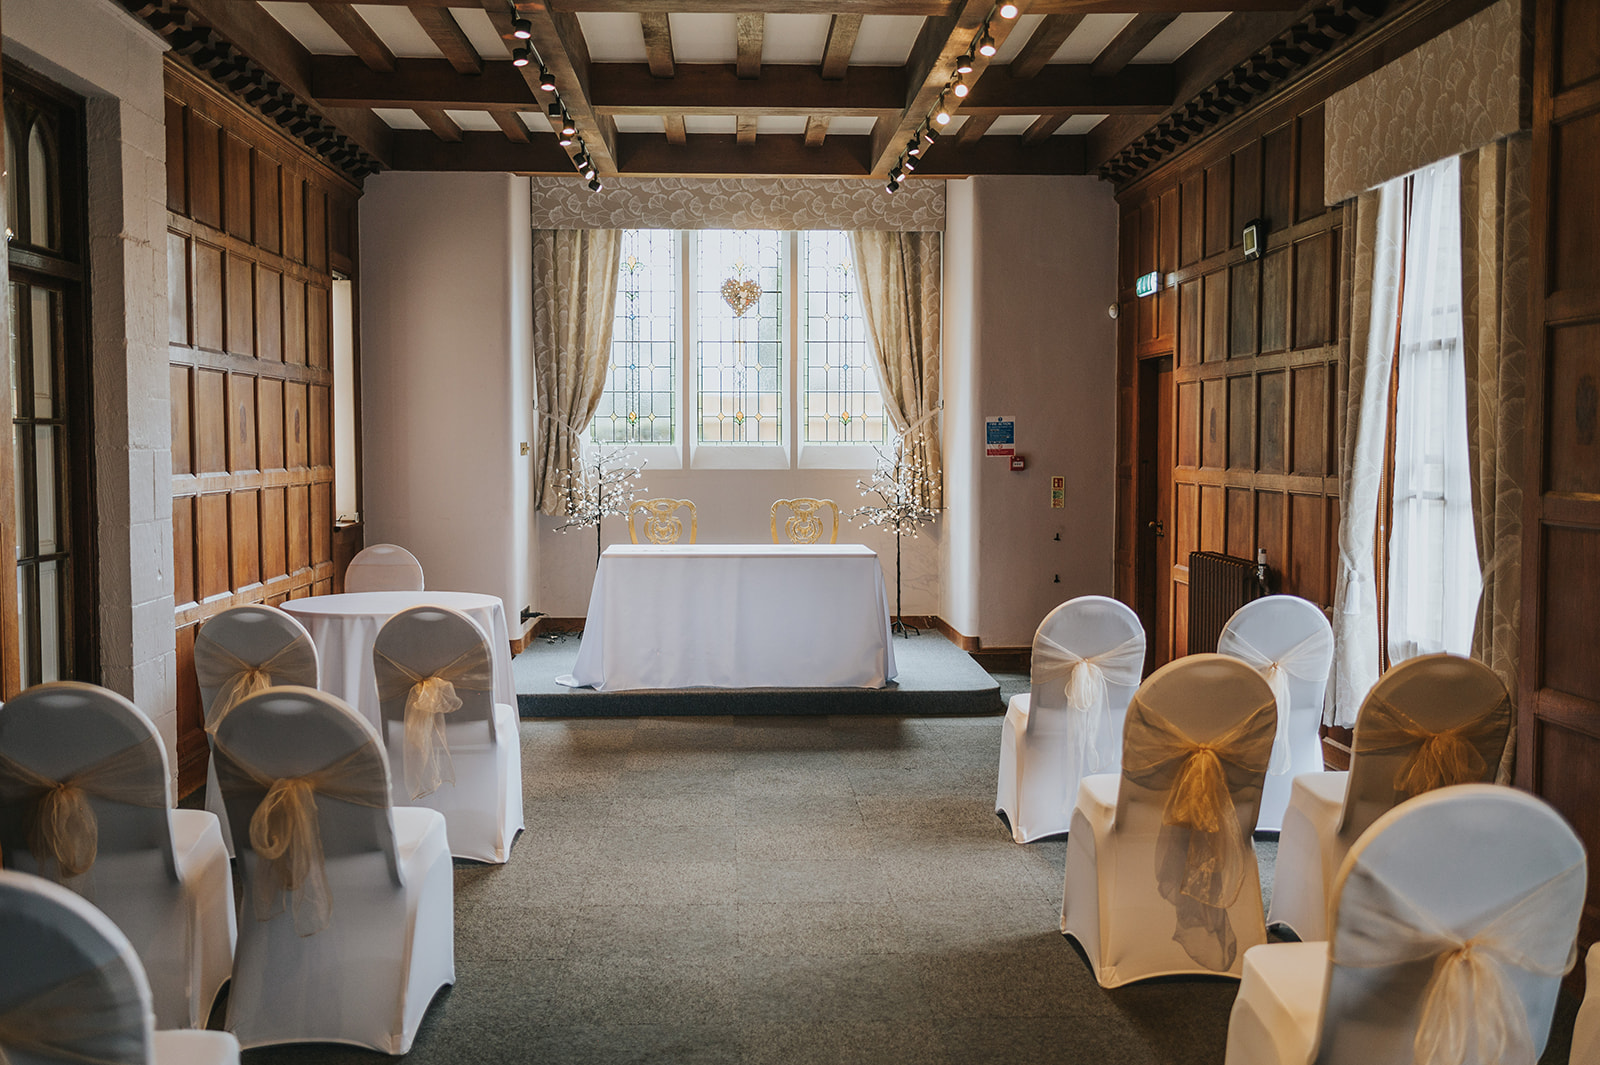 ceremony room in St. Andrews Castle, in Bury St Edmonds